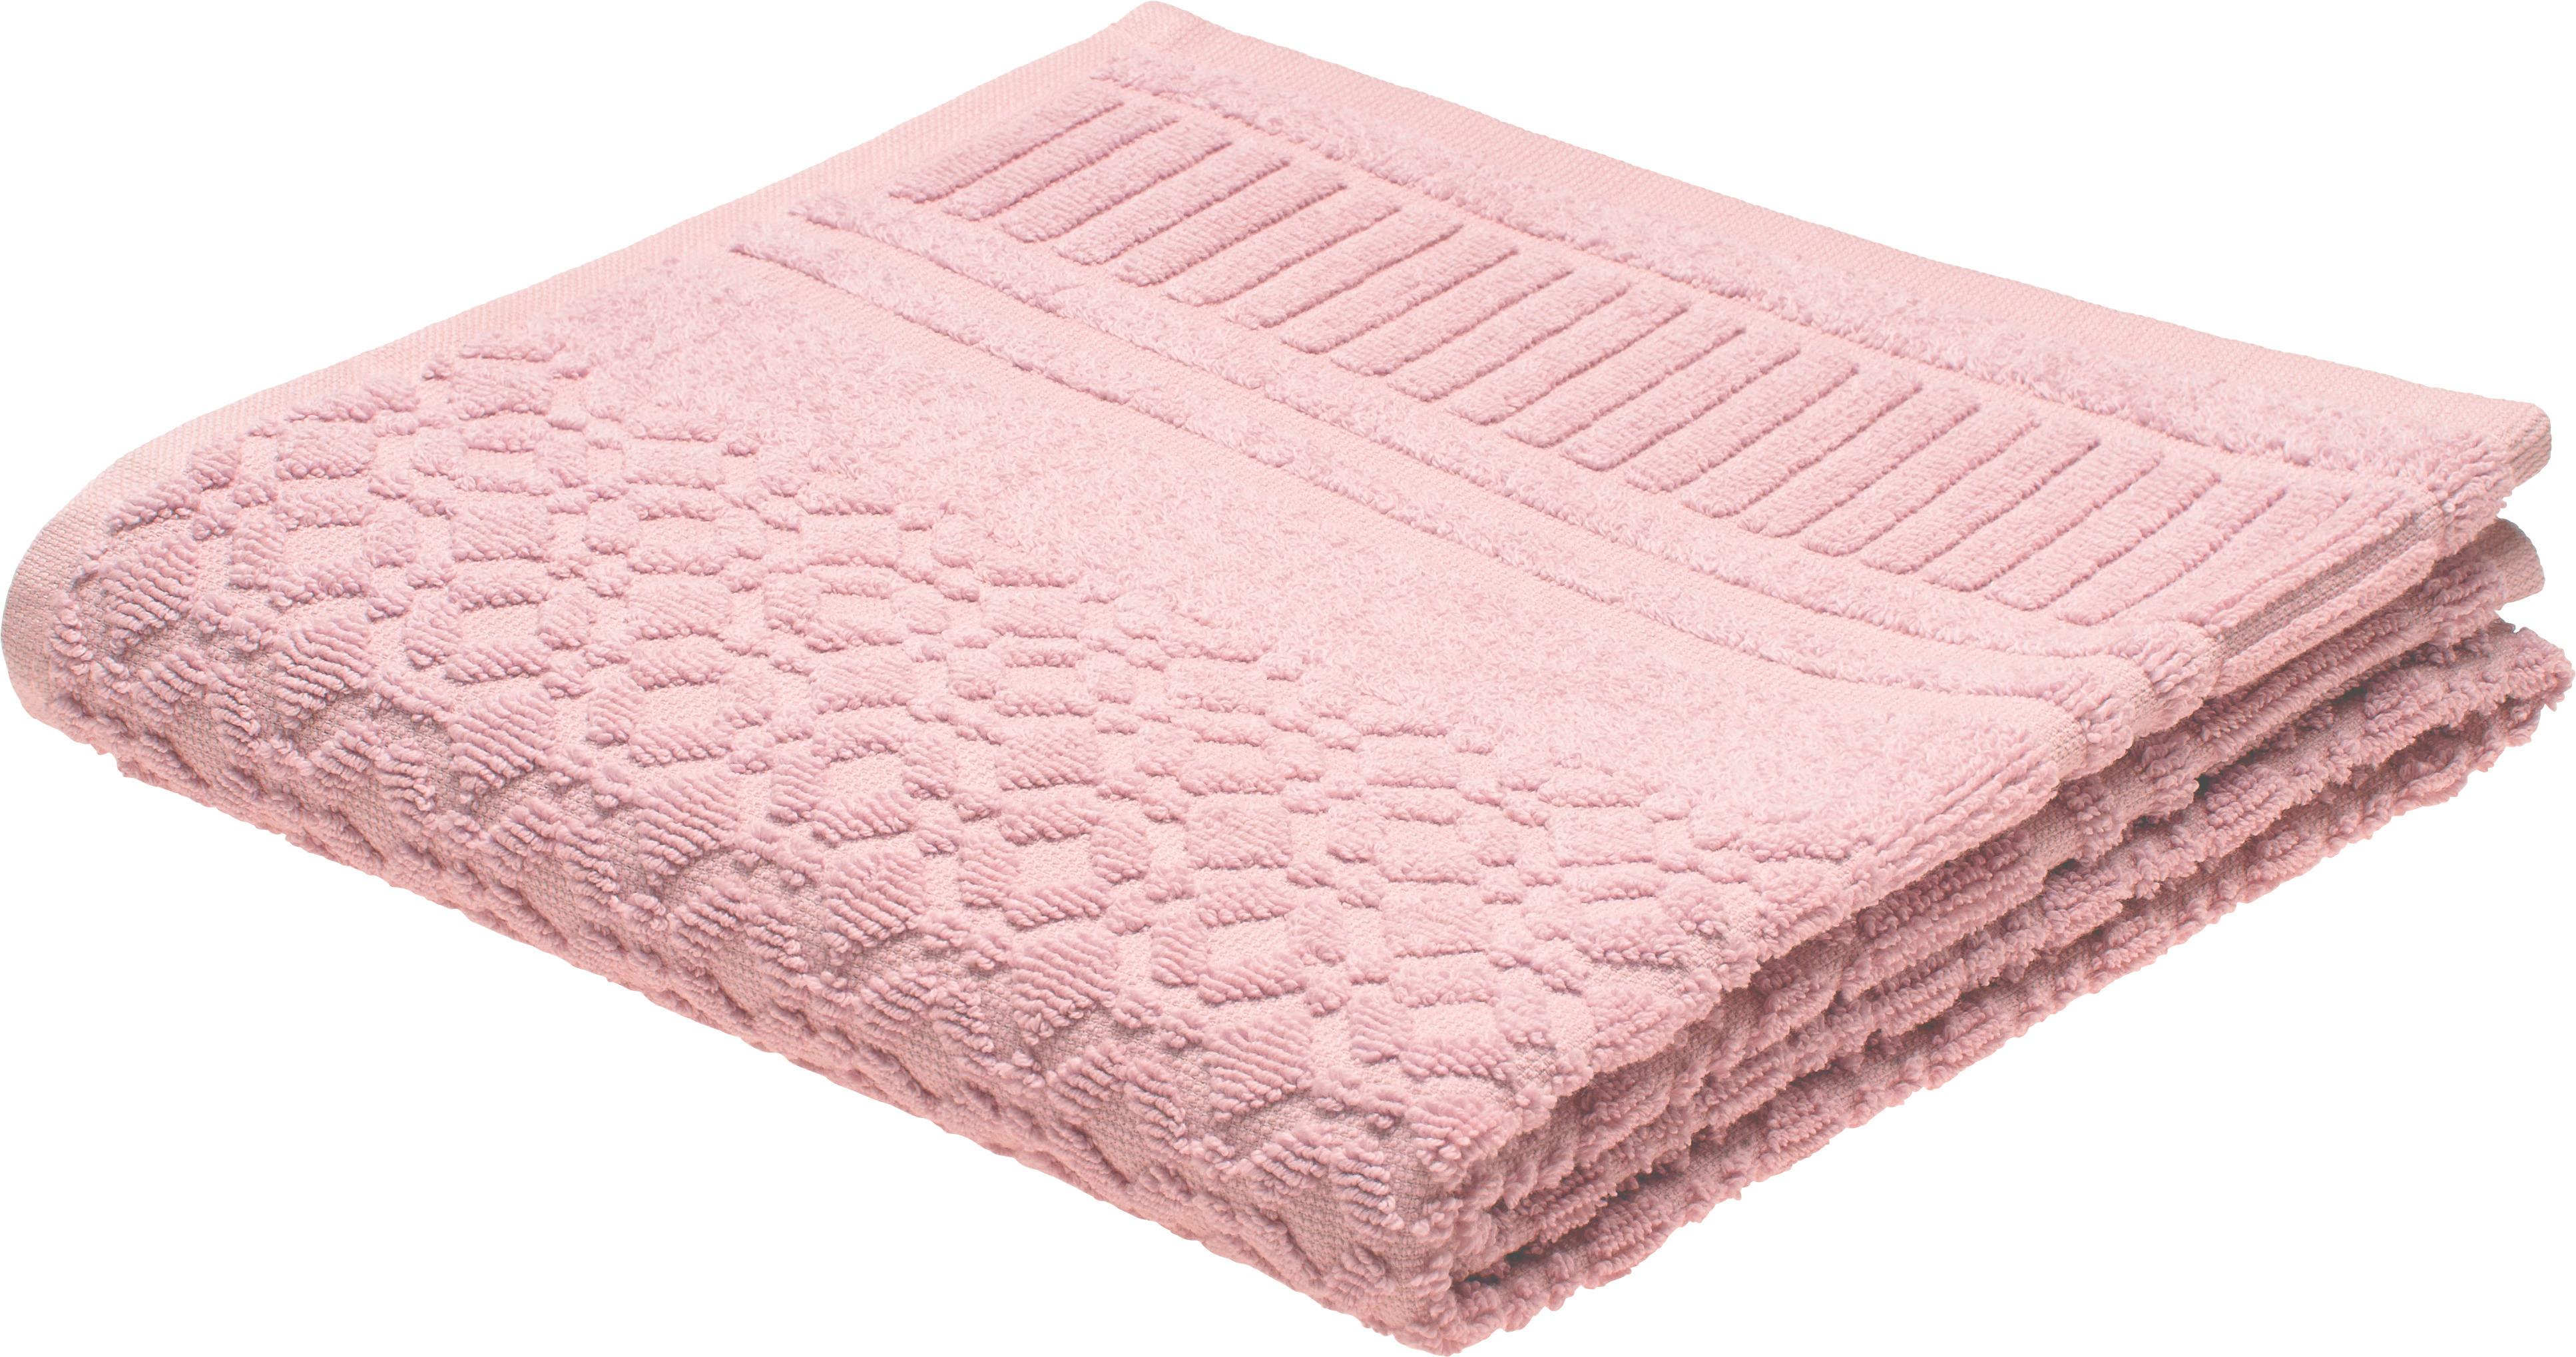 Handtuch Carina in Rosa - Rosa, Romantik / Landhaus, Textil (50/100cm) - Modern Living